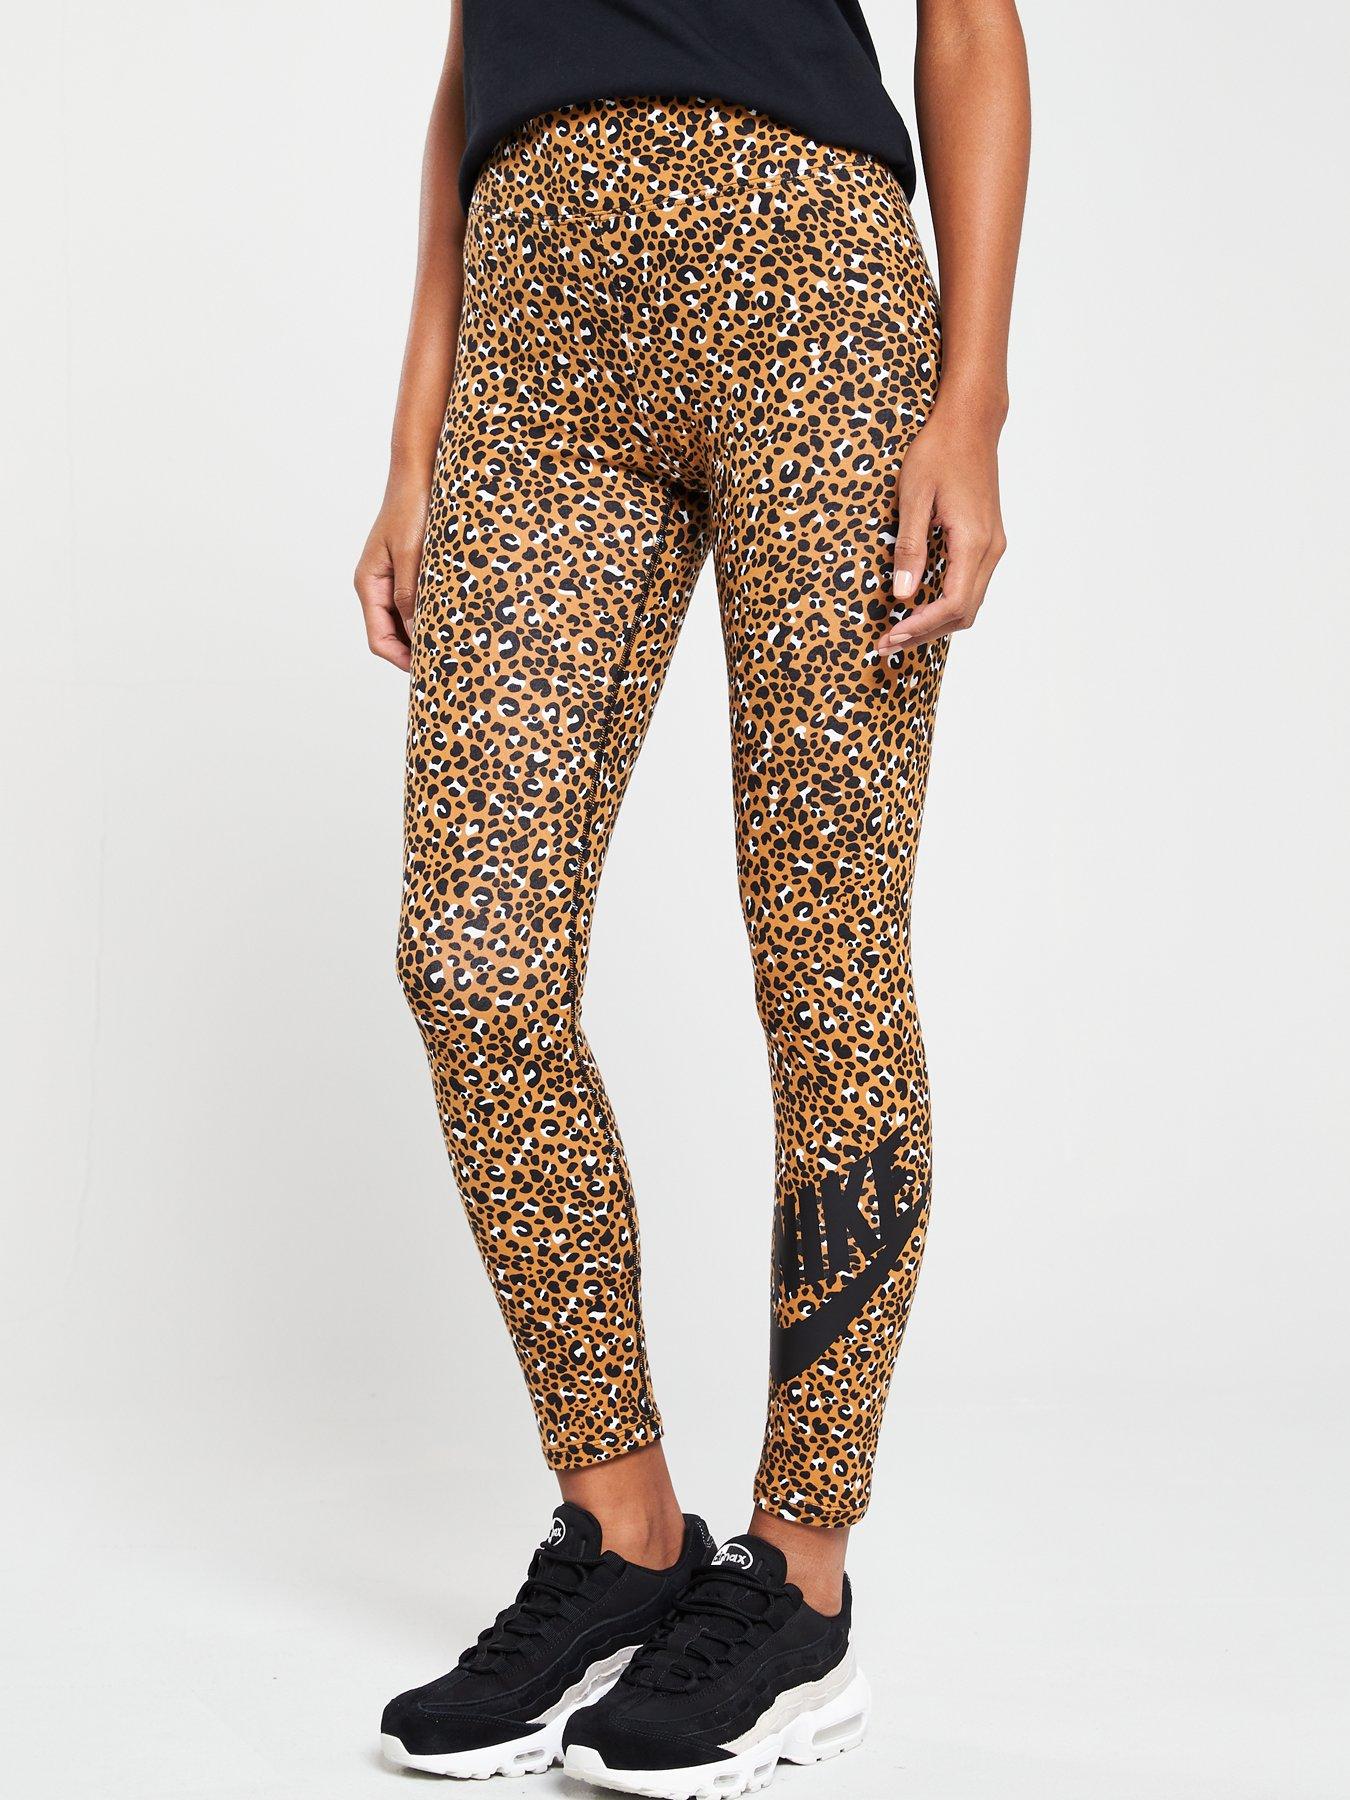 leopard print gym leggings nike